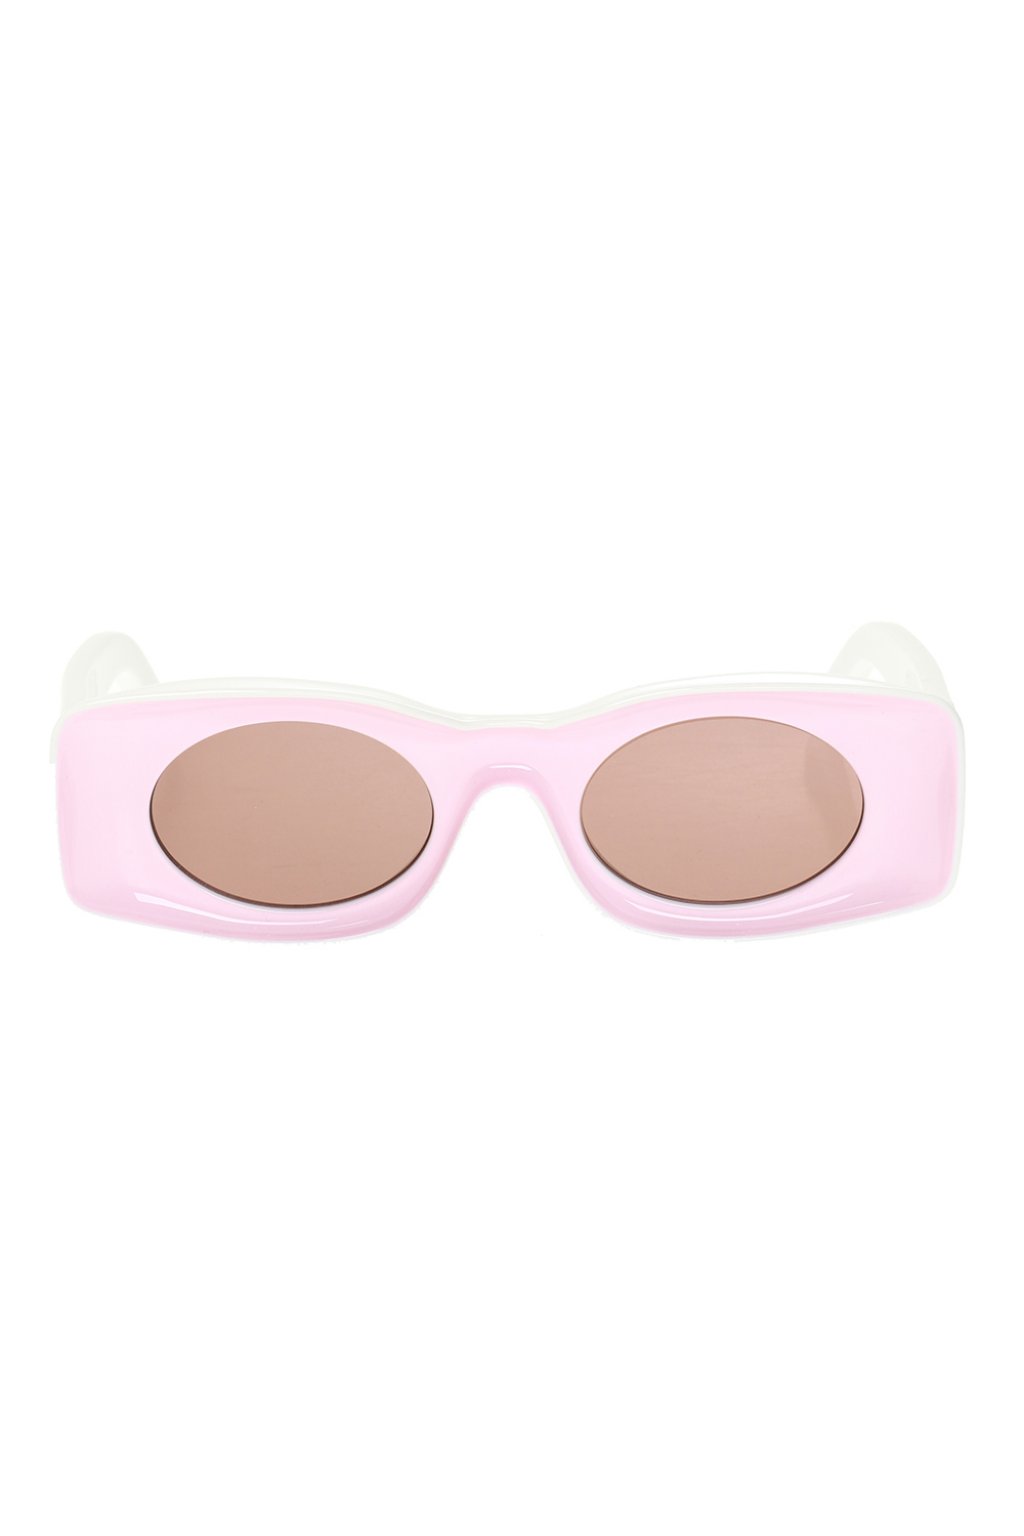 loewe sunglasses pink